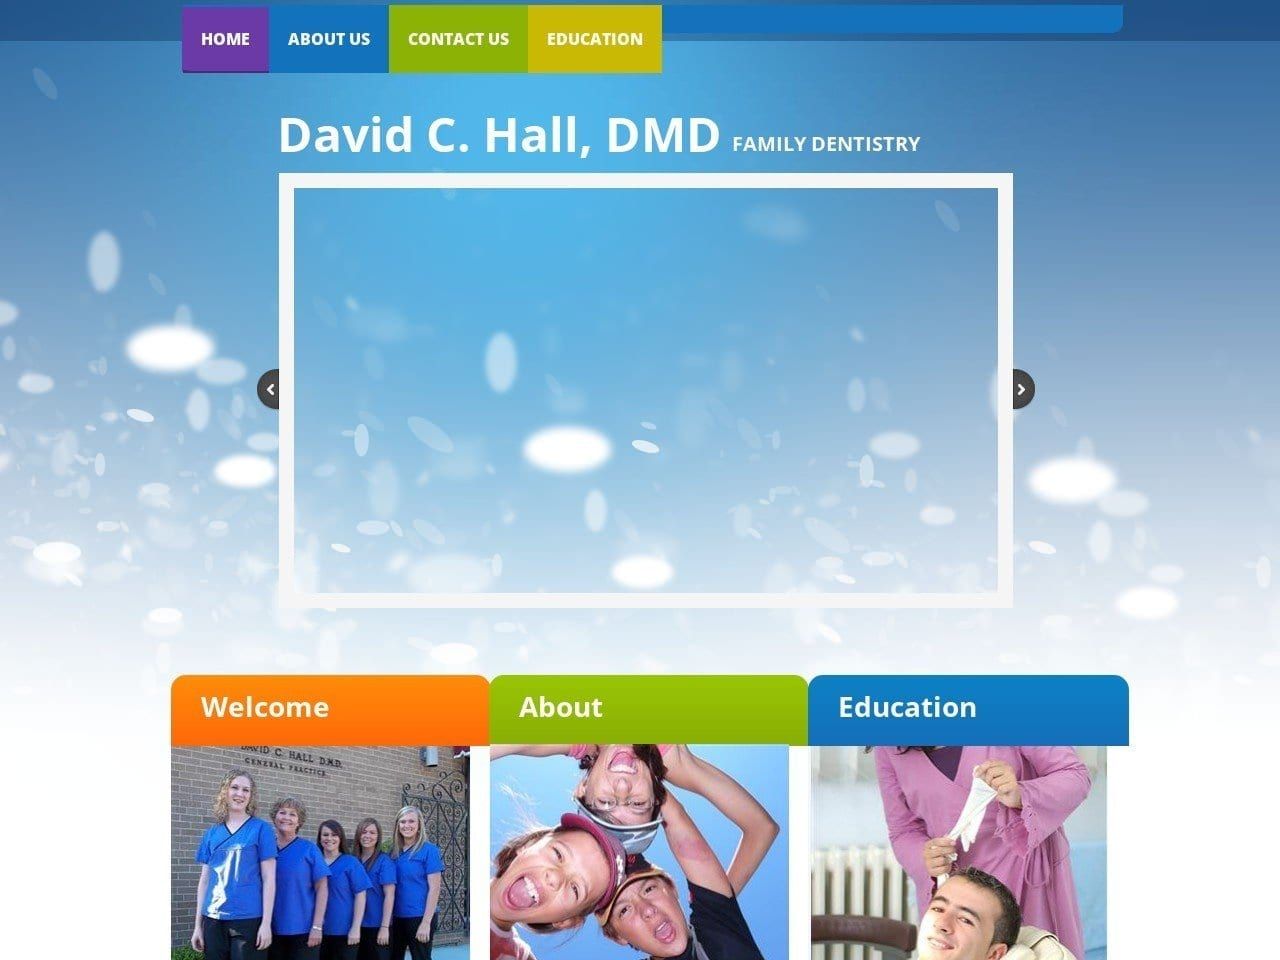 Dr. David C. Hall DMD Website Screenshot from davidhalldentist.com